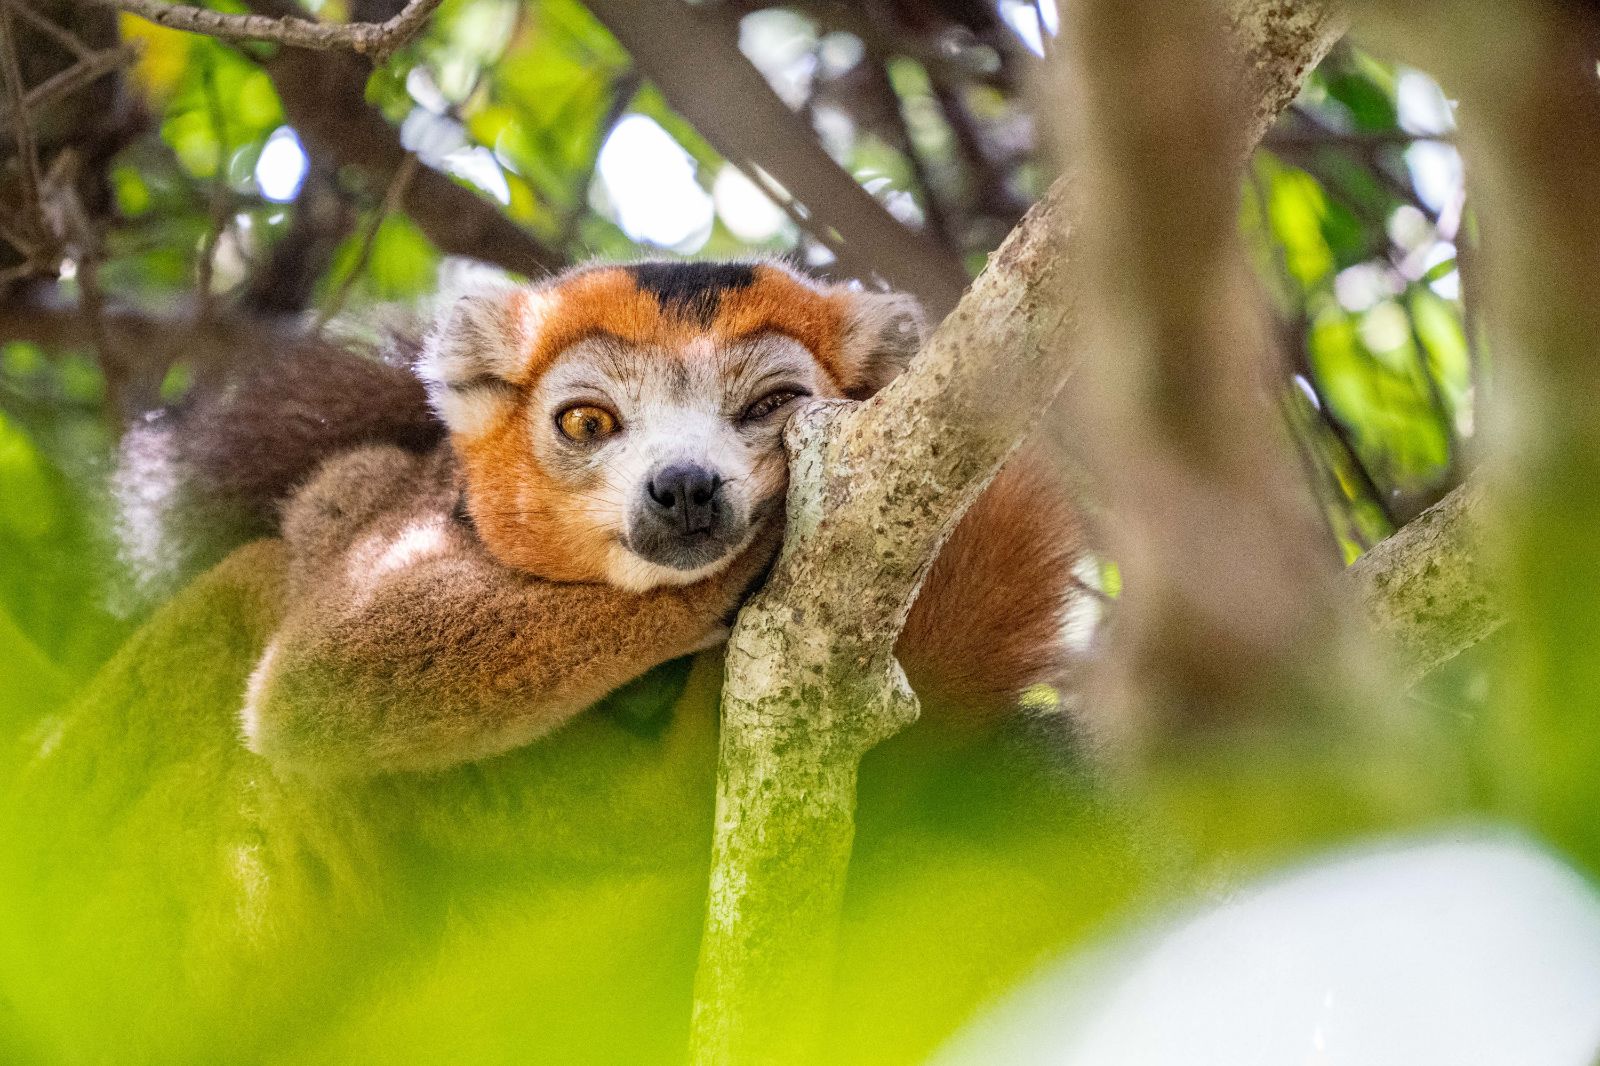 Lemur sleeping in a tree on the grounds of Miavana private island resort off Madagascar's north coast